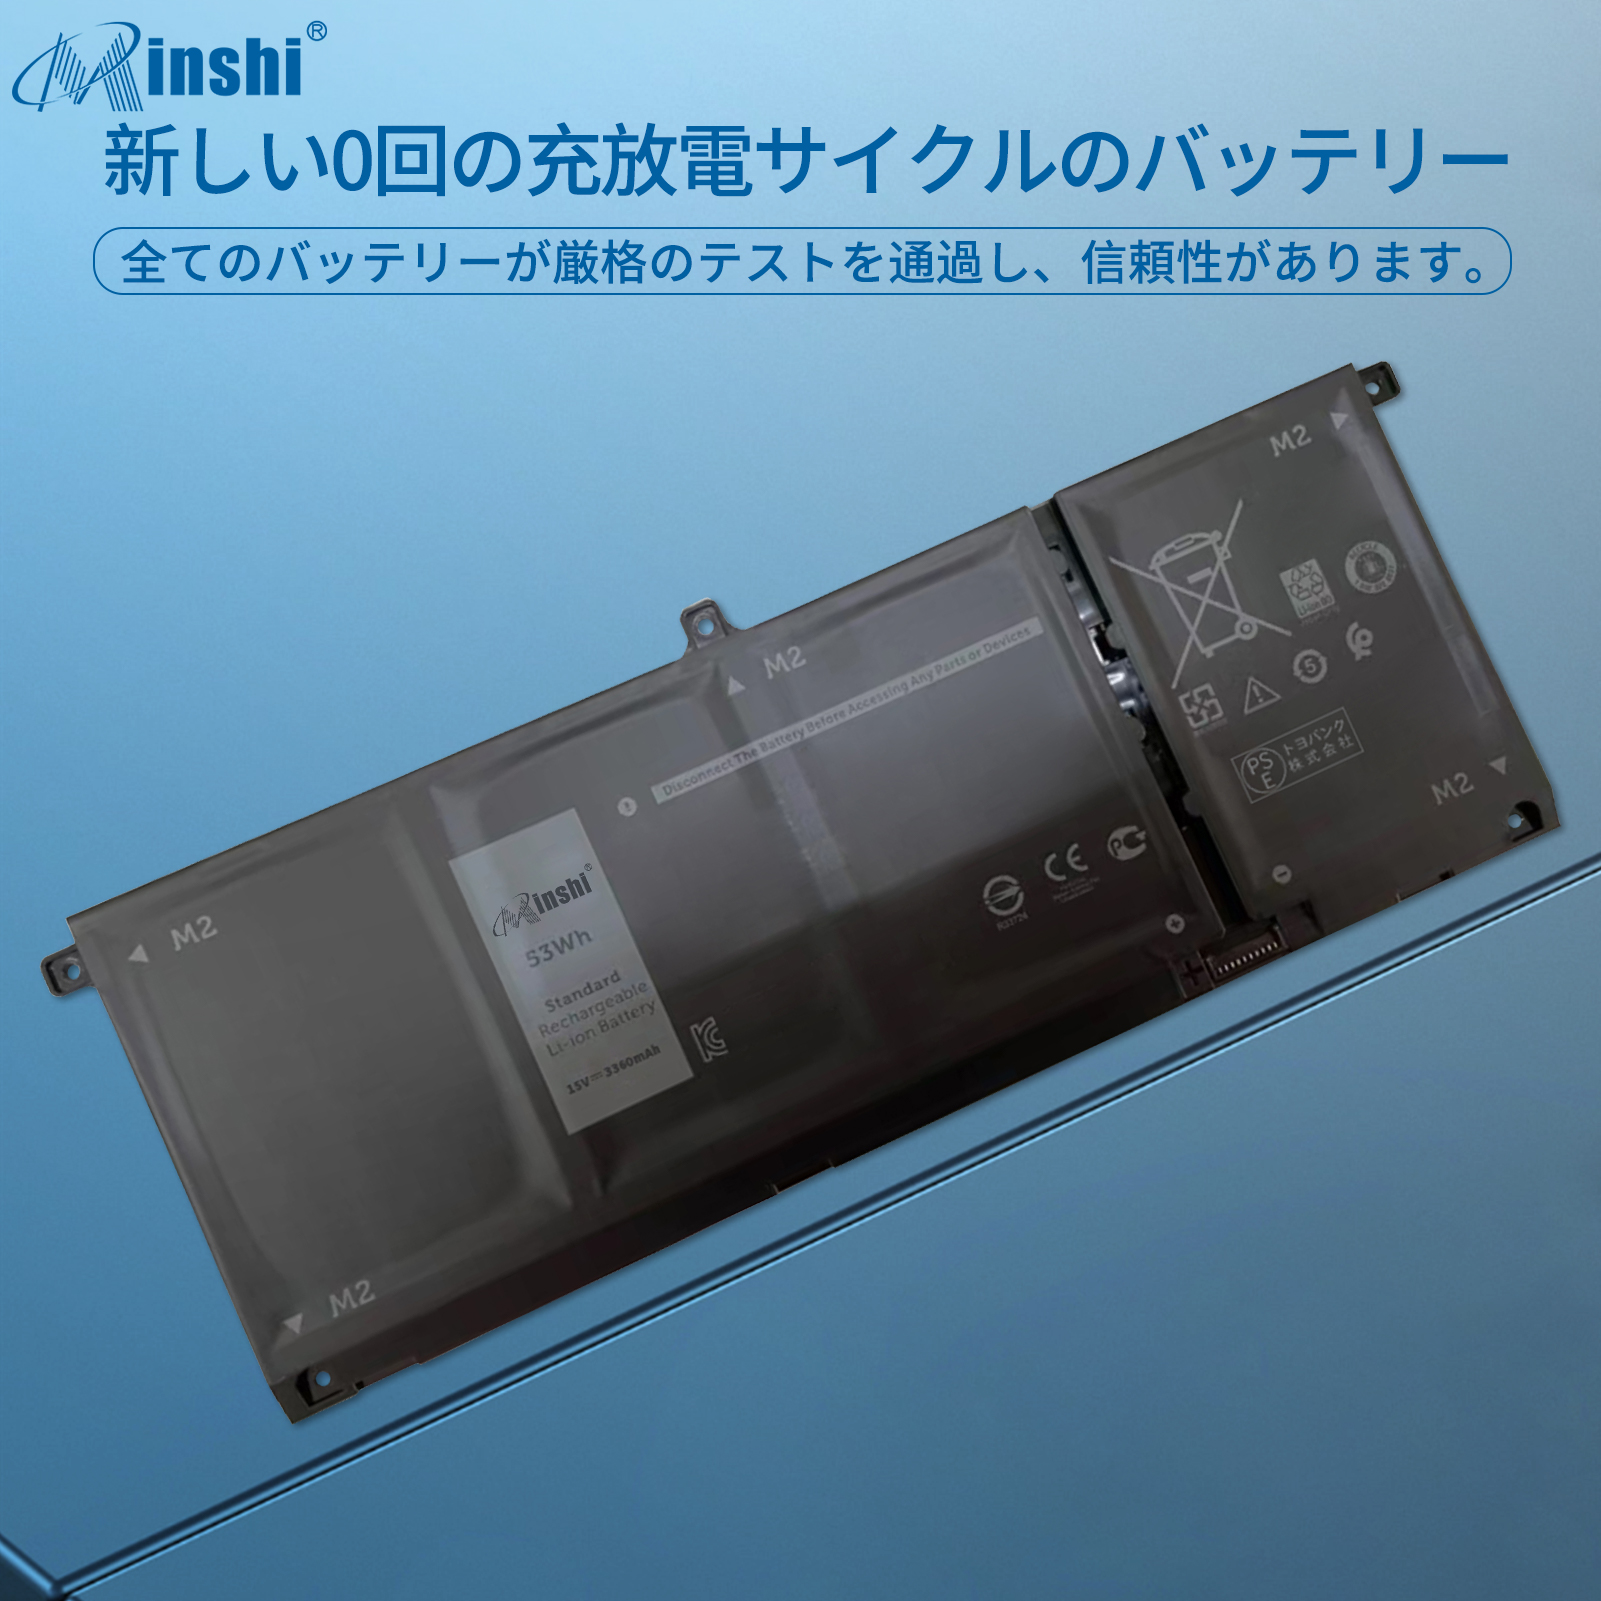 minshi】DELL Inspiron 7300 2-in-1 Black【3360mAh 15V】対応用 高